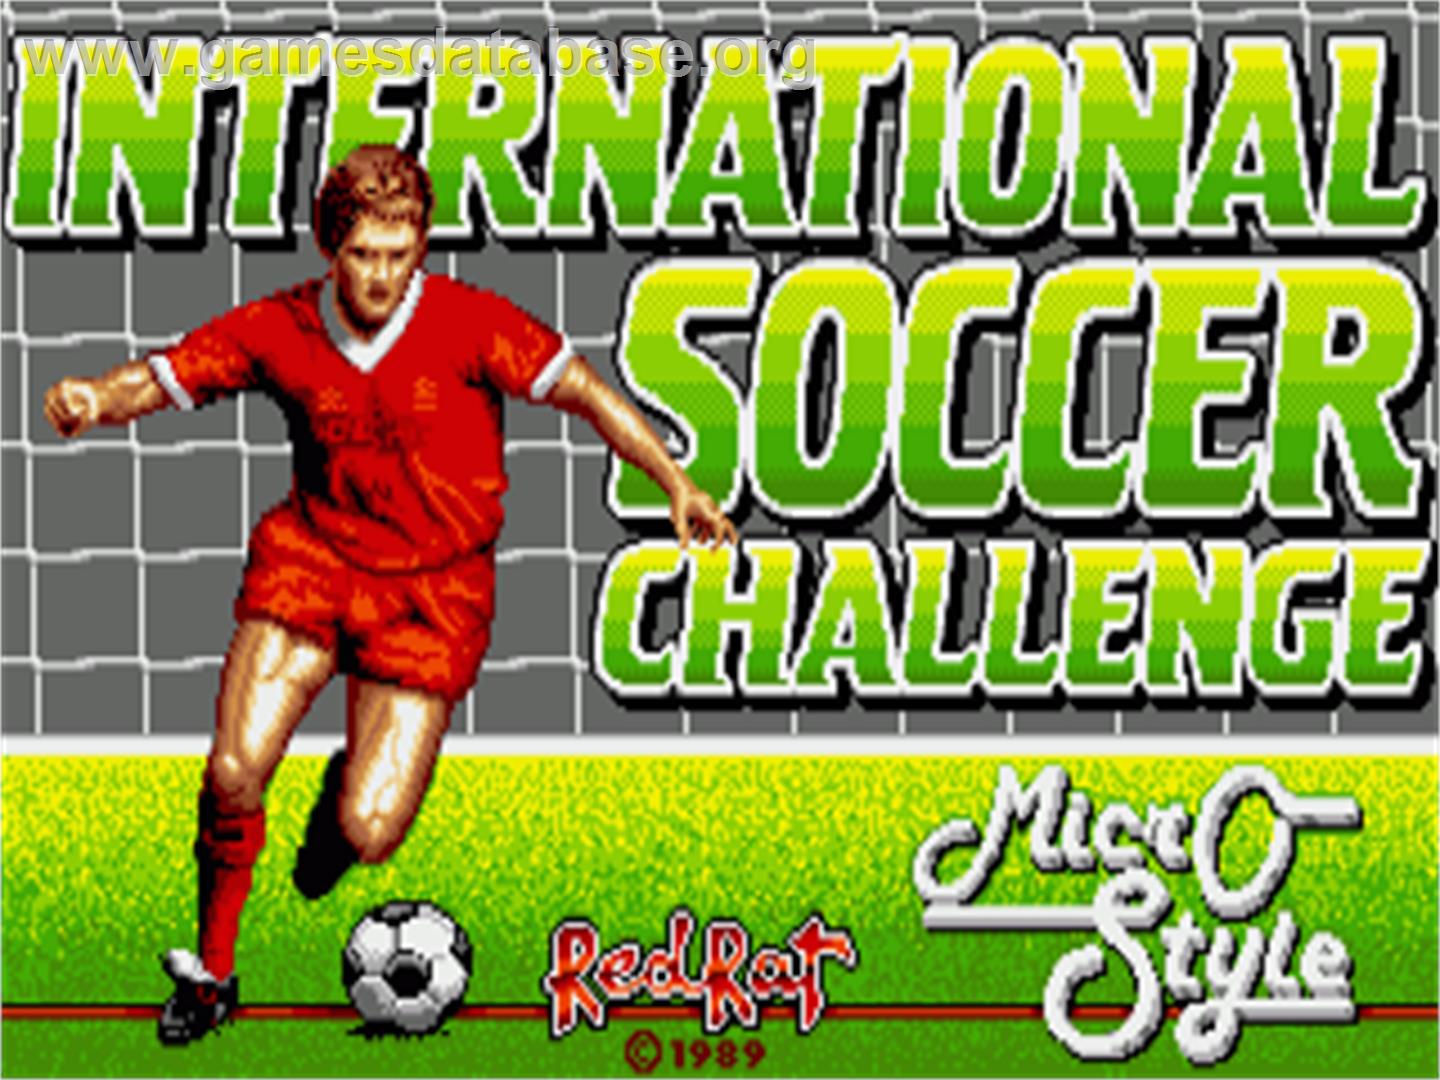 International Soccer Challenge - Commodore Amiga - Artwork - Title Screen